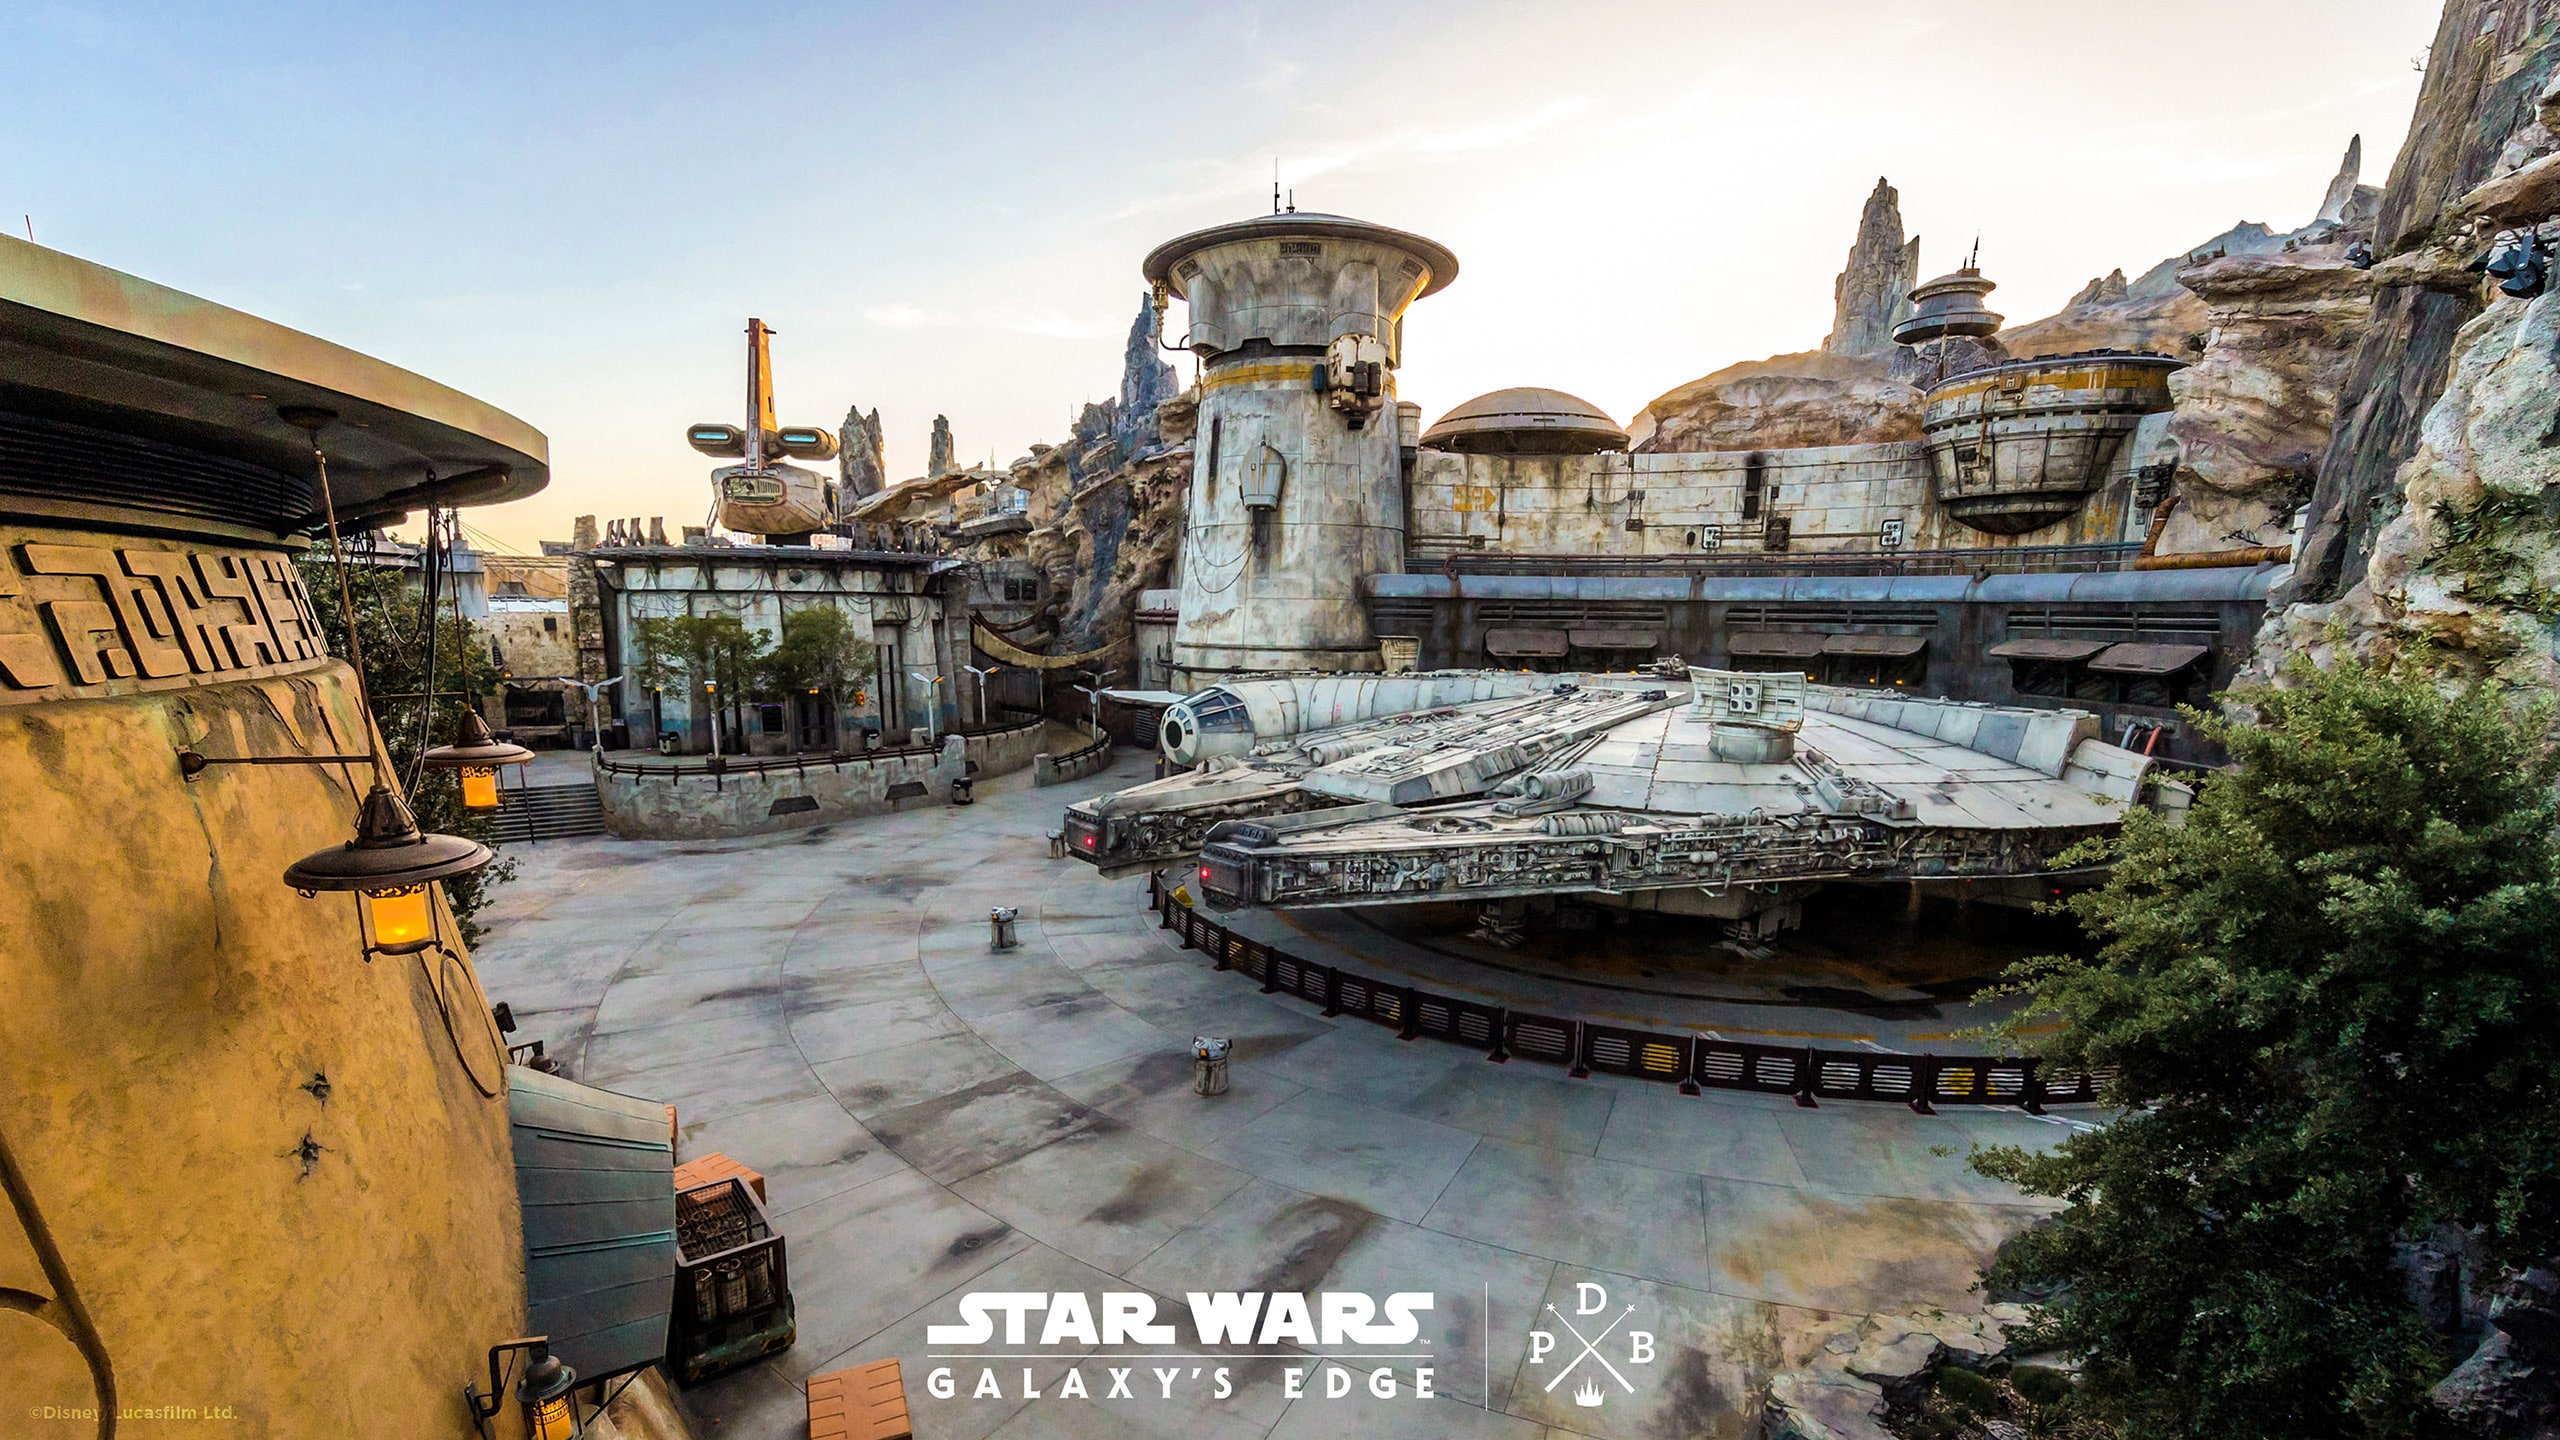 Star Wars Galaxy S Edge At Disneyland Resort Wallpaper Desktop Ipad Disney Parks Blog